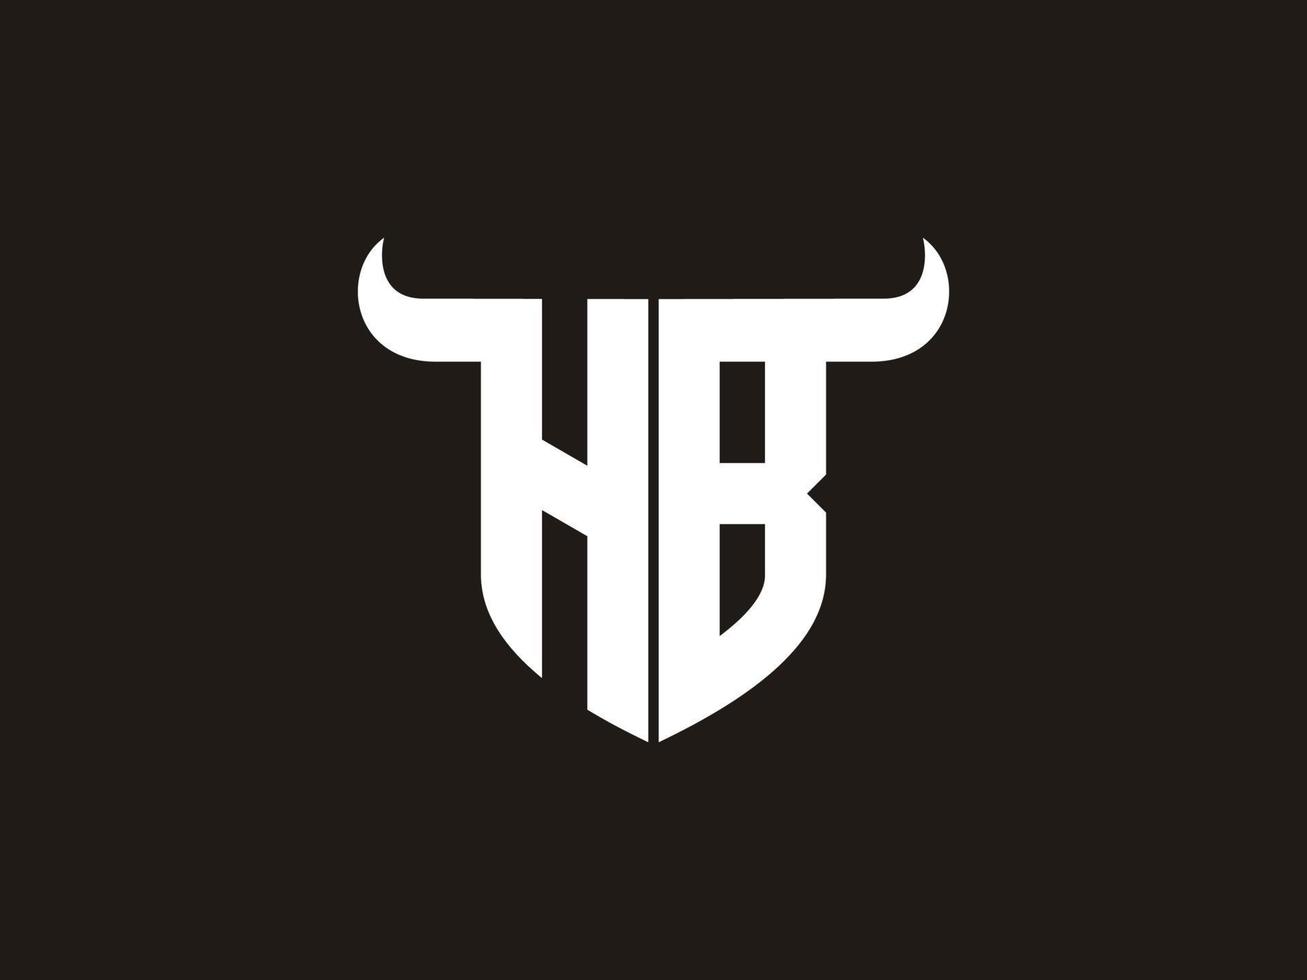 anfängliches hb-bull-logo-design. vektor